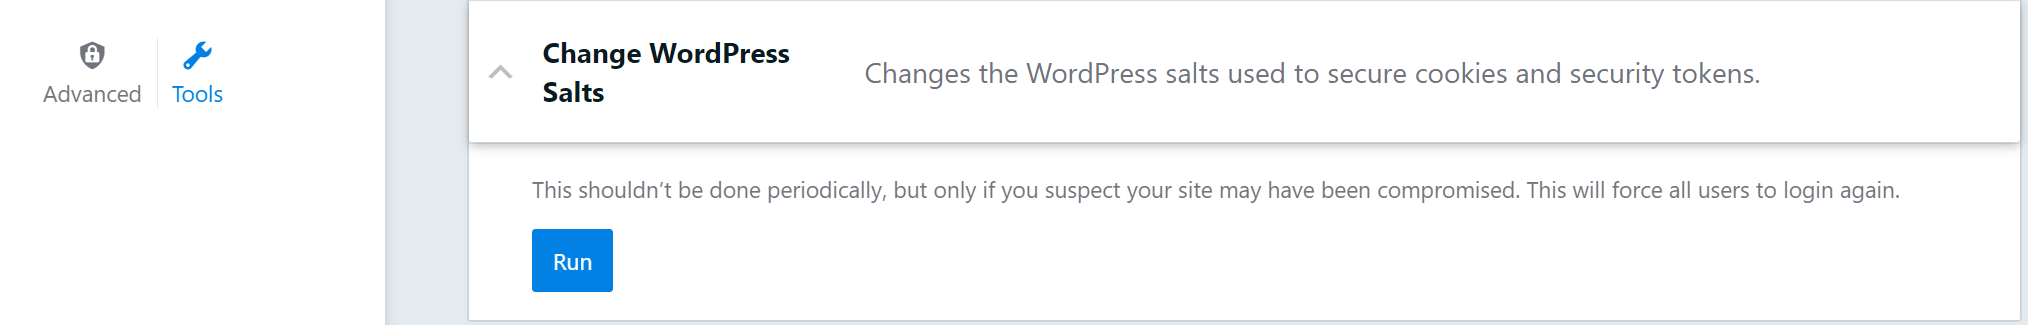 iThemes Security Change WordPress Salts